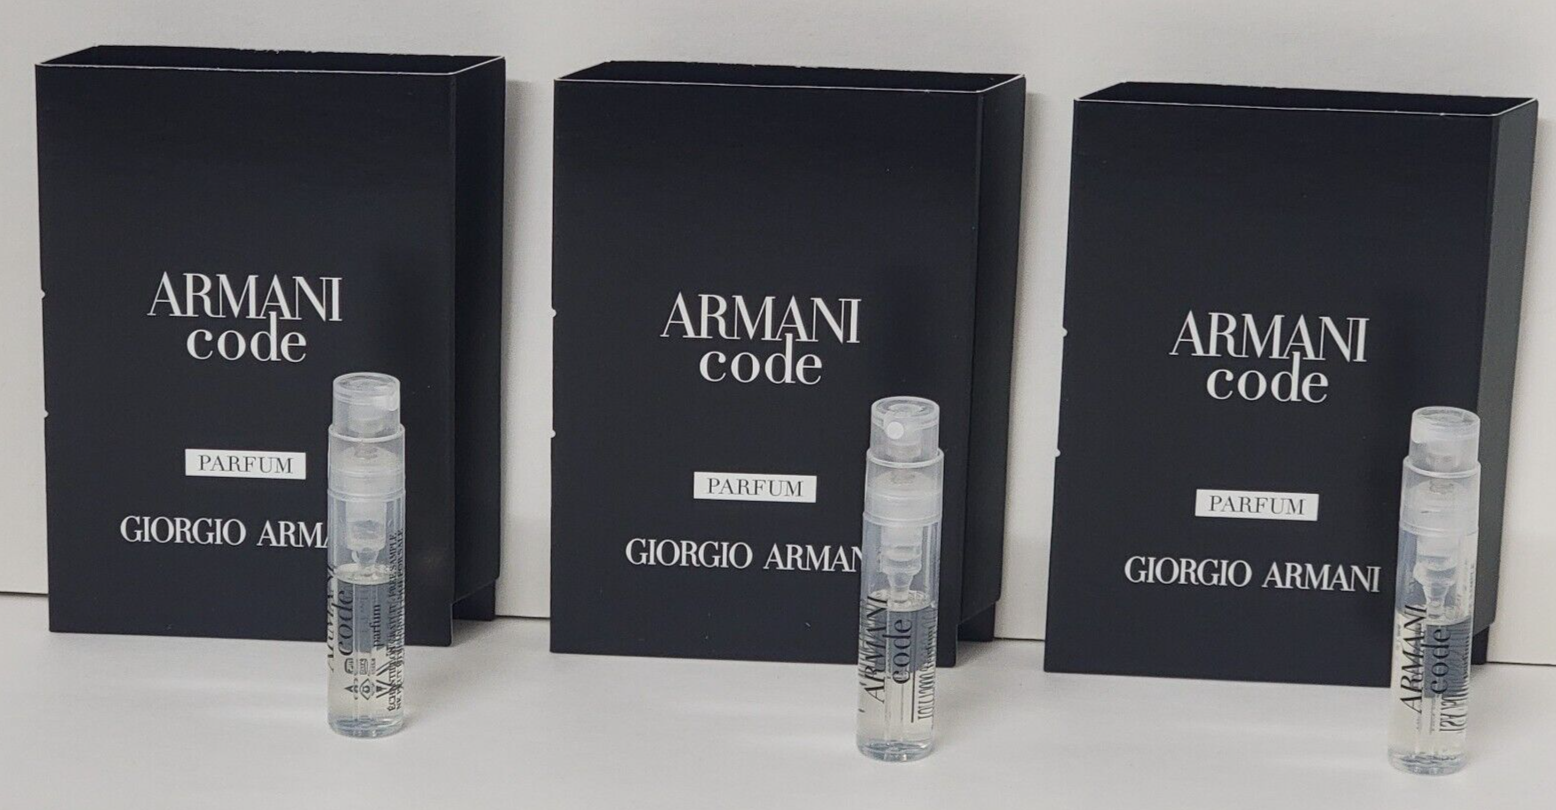 NEW ARMANI CODE PARFUM 0.04 oz SPRAY FOR MEN by GIORGIO ARMANI (3 Sample Vials) Giorgio Armani 207047 - фотография #2